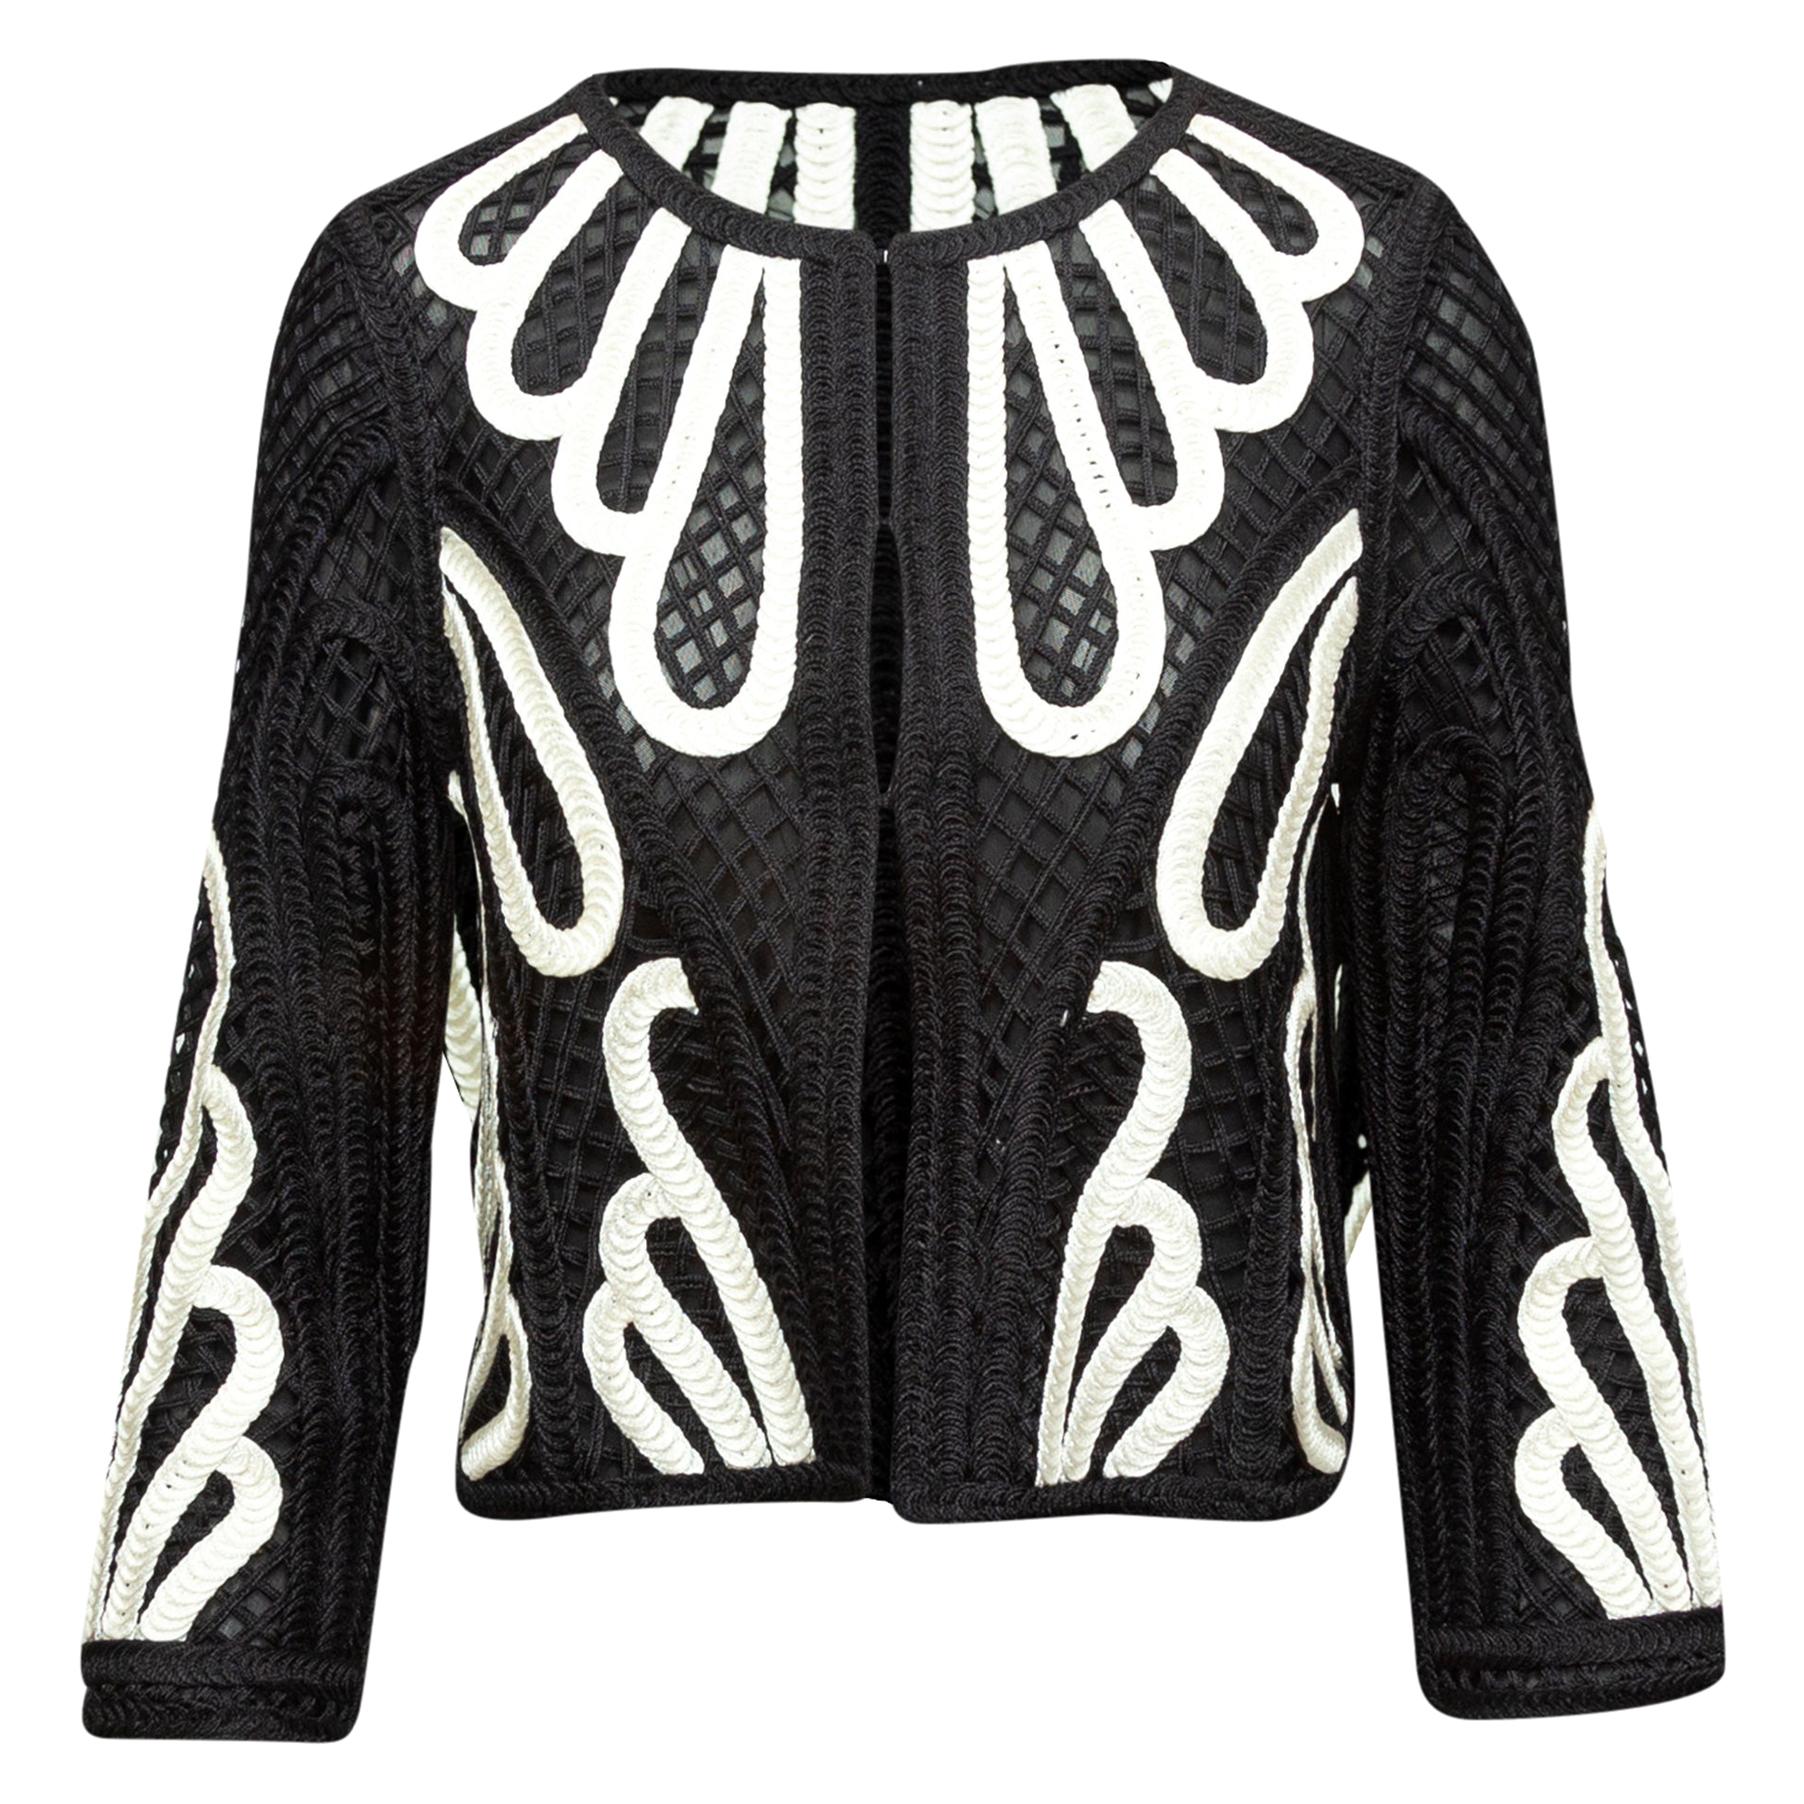 Maje Black & White Embroidered Sheer Jacket